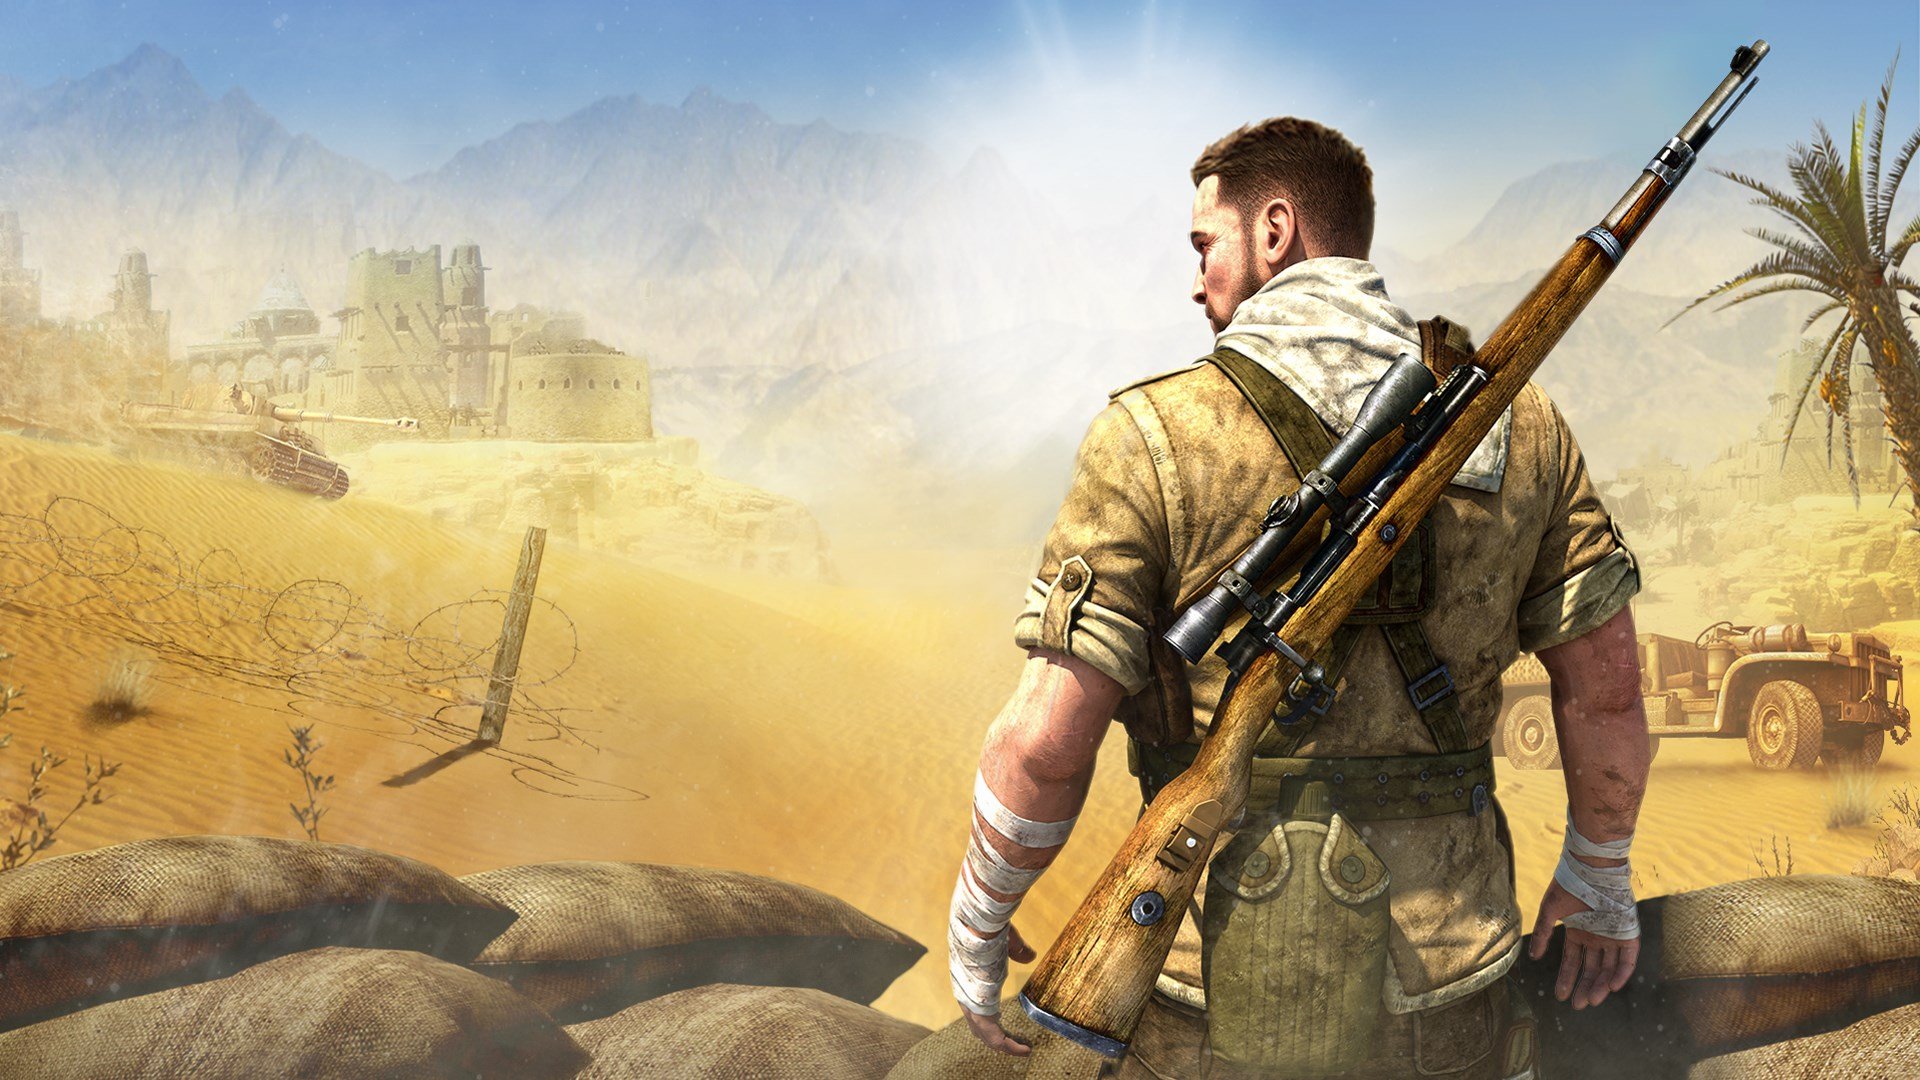 Sniper Elite 3 cover image